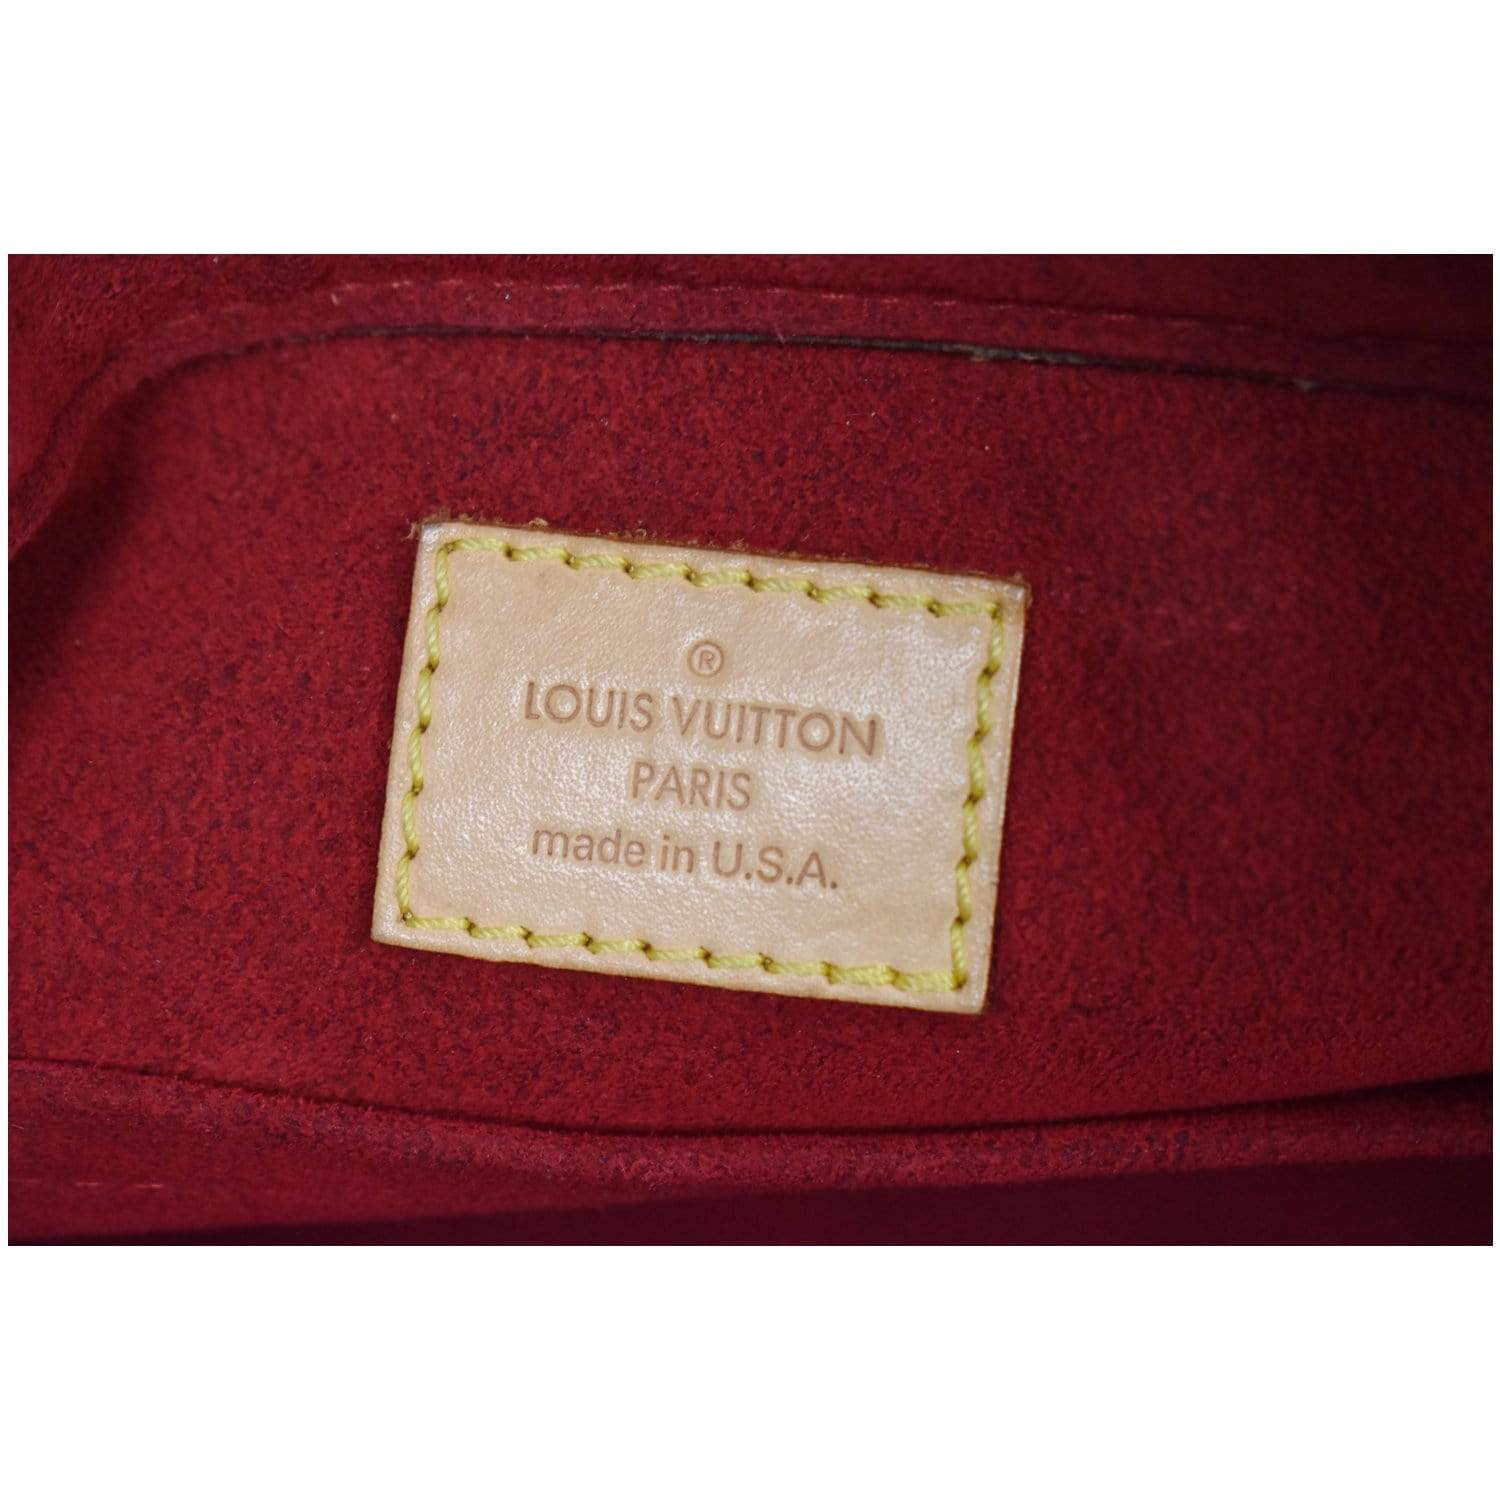 Louis Vuitton - Viva Cite mm - Brown / Tan Monogram Shoulder Bag